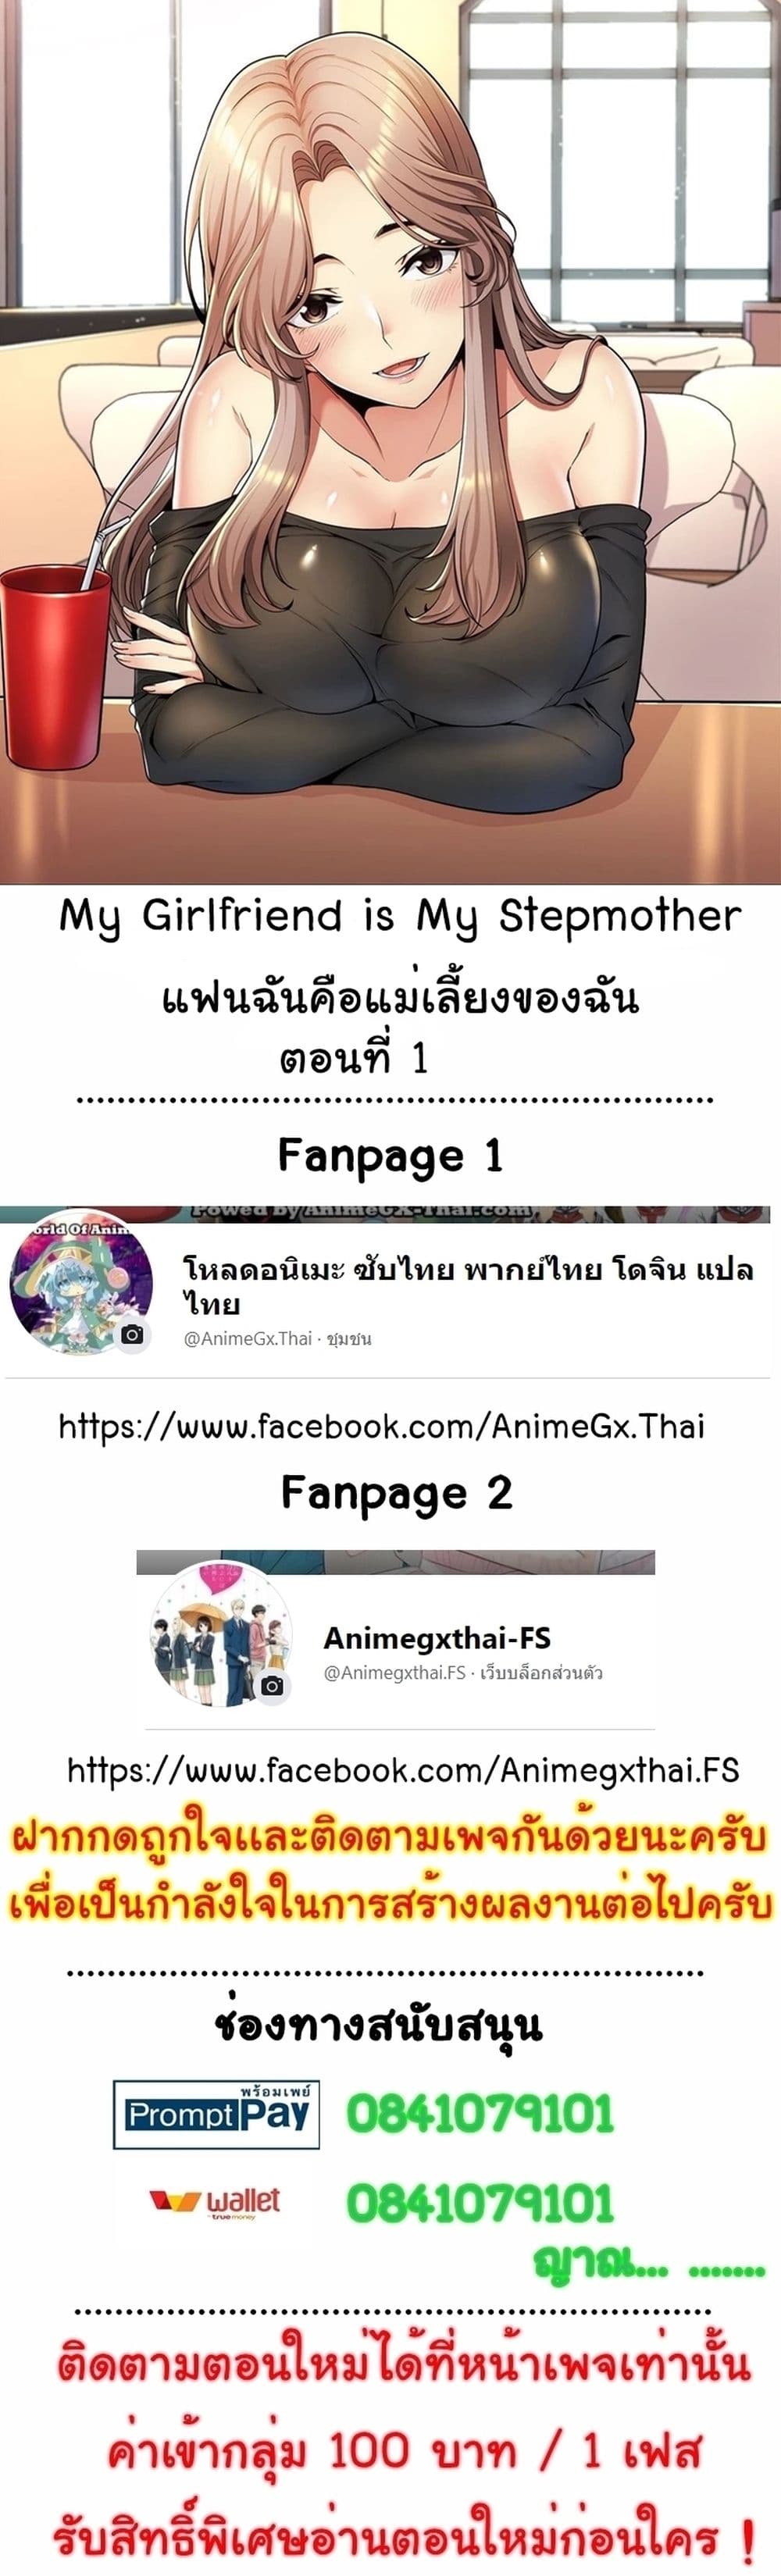 My Girlfriend is My Stepmother 1 01